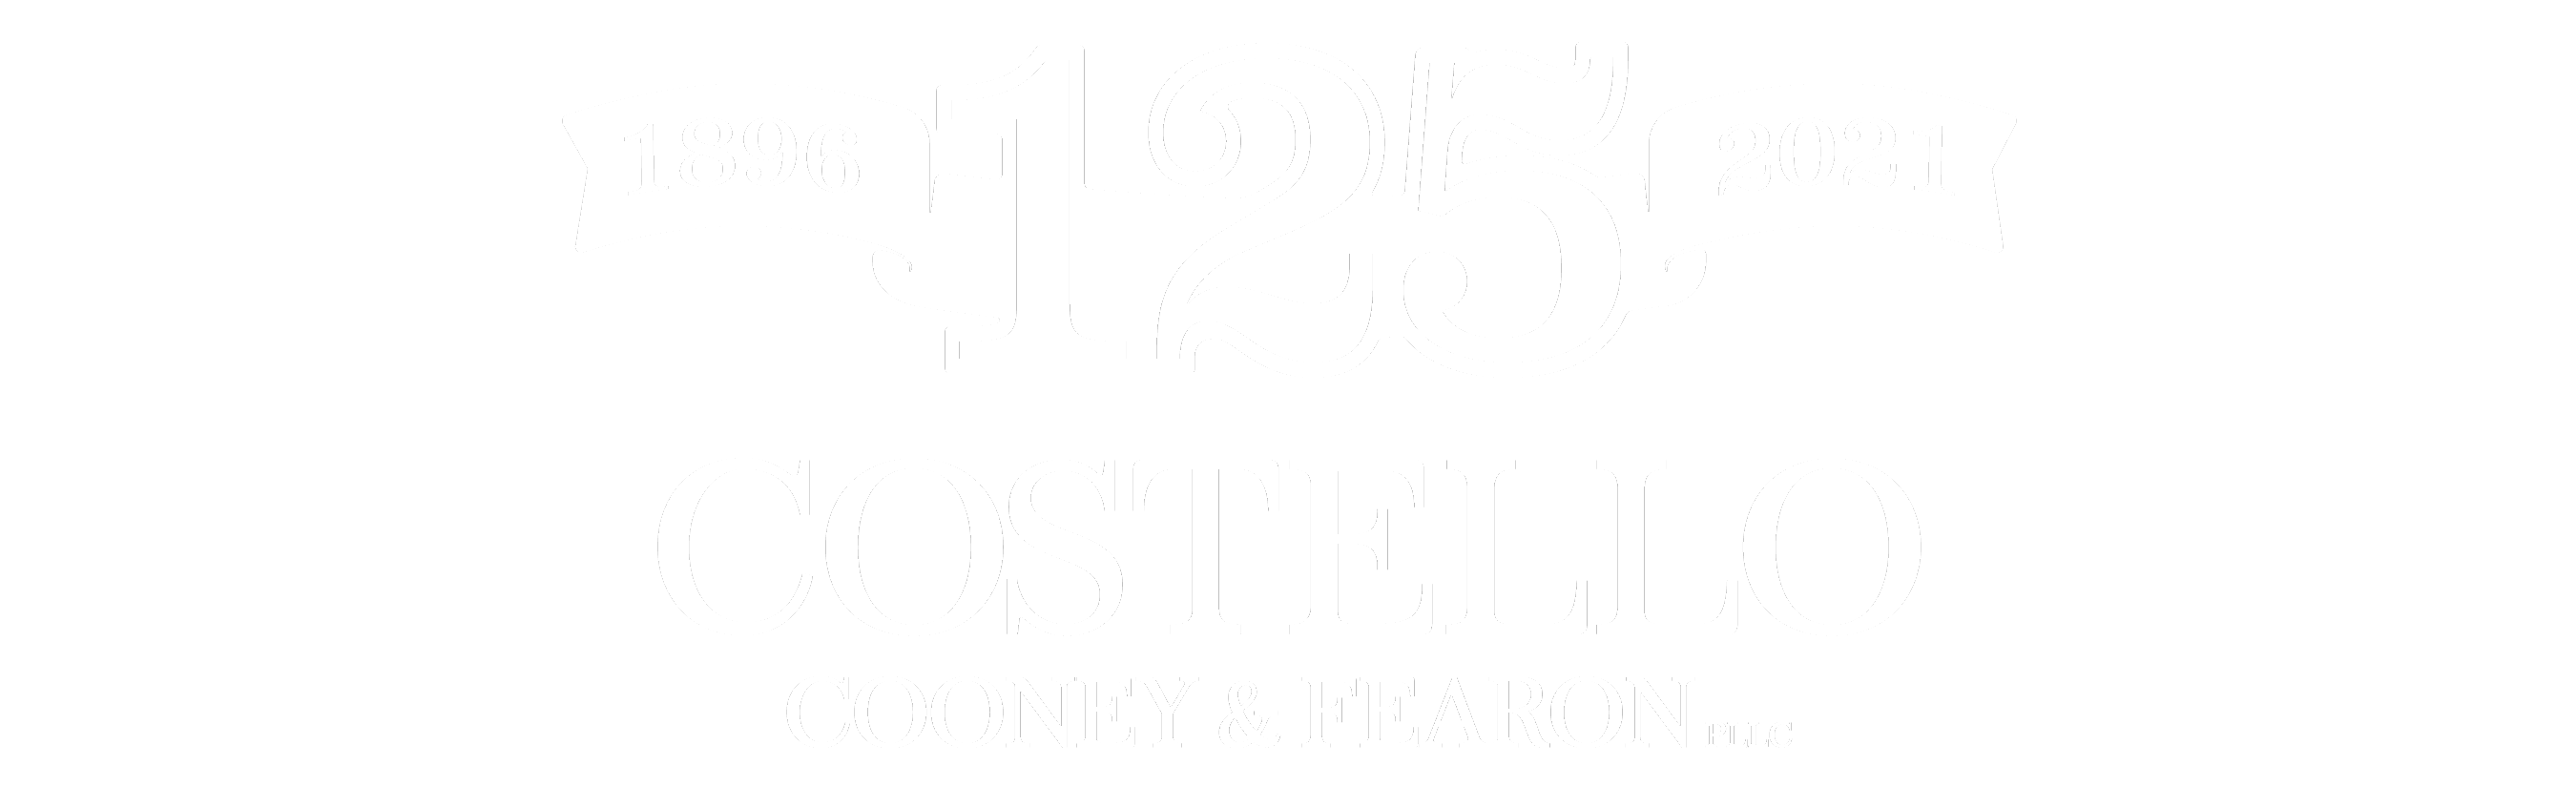 Costello, Cooney & Fearon 125 Year Anniversary logo